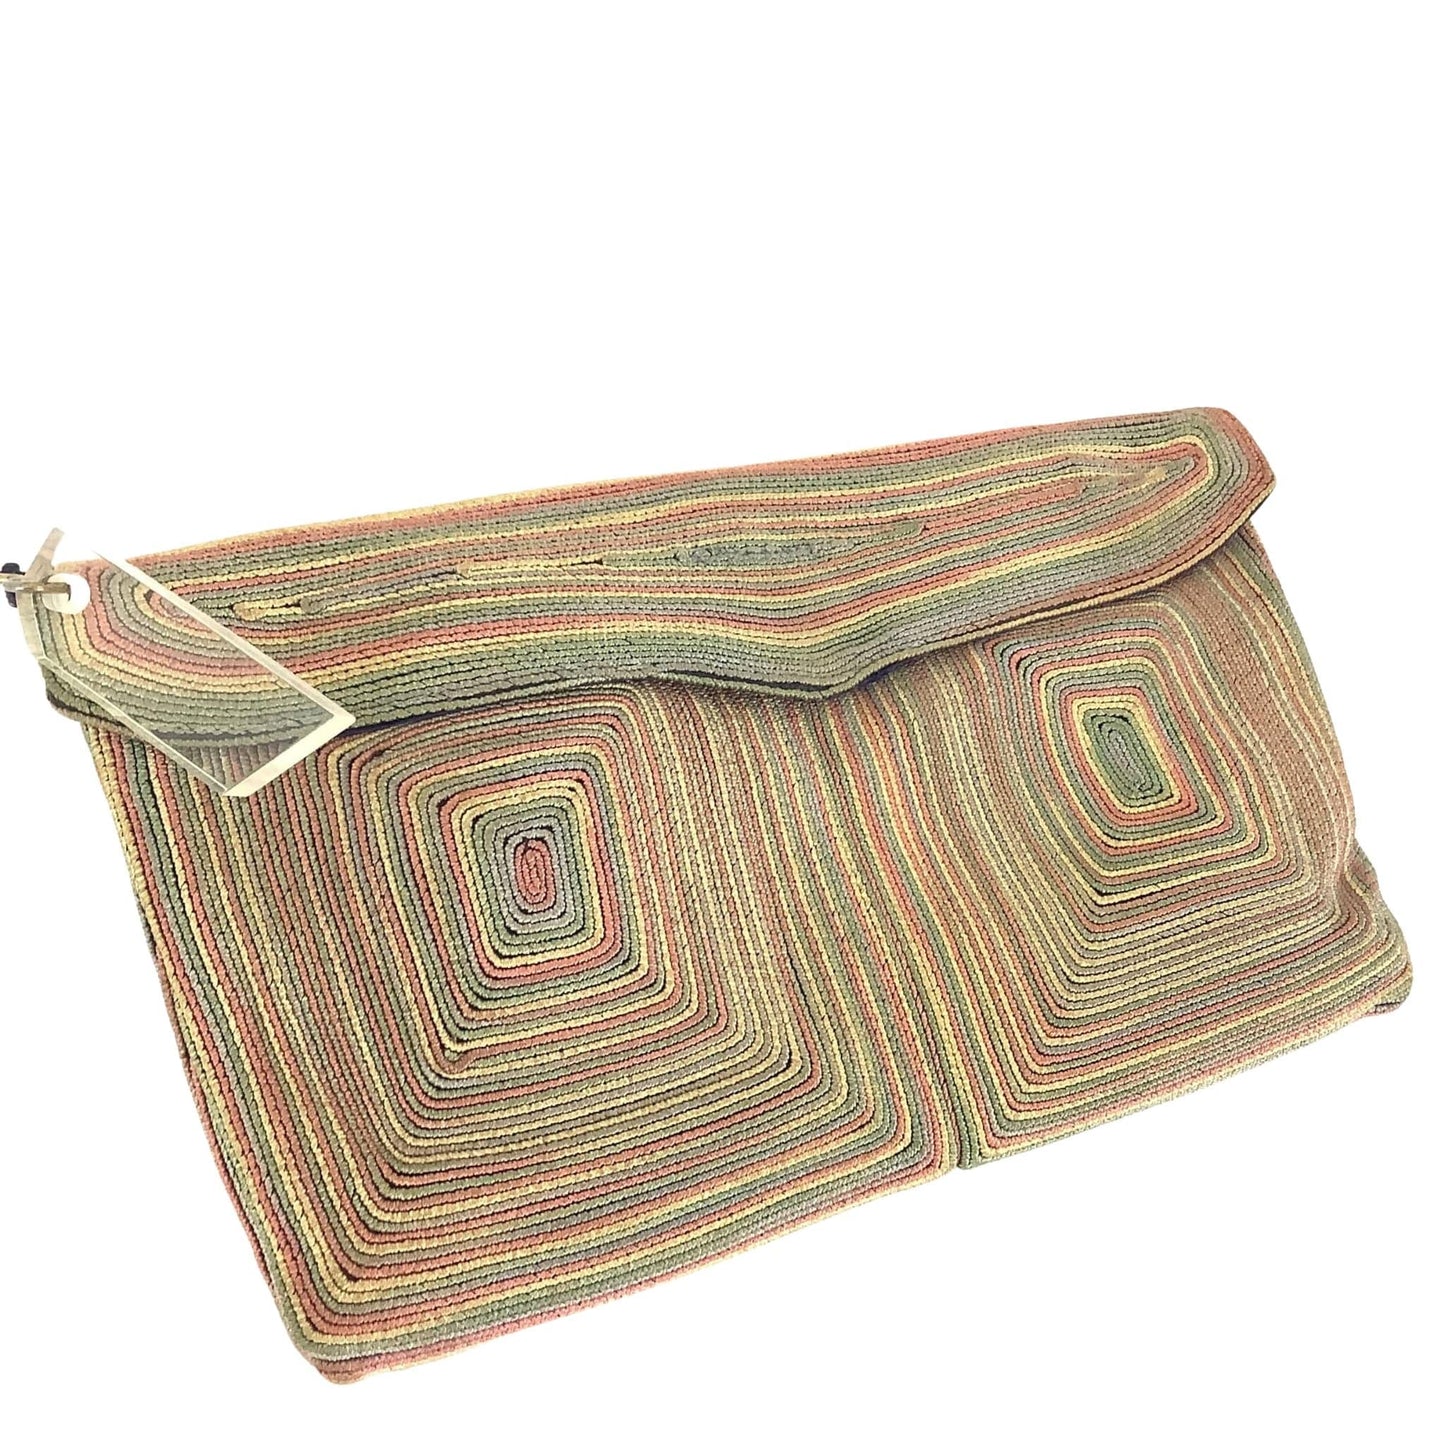 Mardlay Corded Clutch Bag Multi / Textile / Vintage 1940s